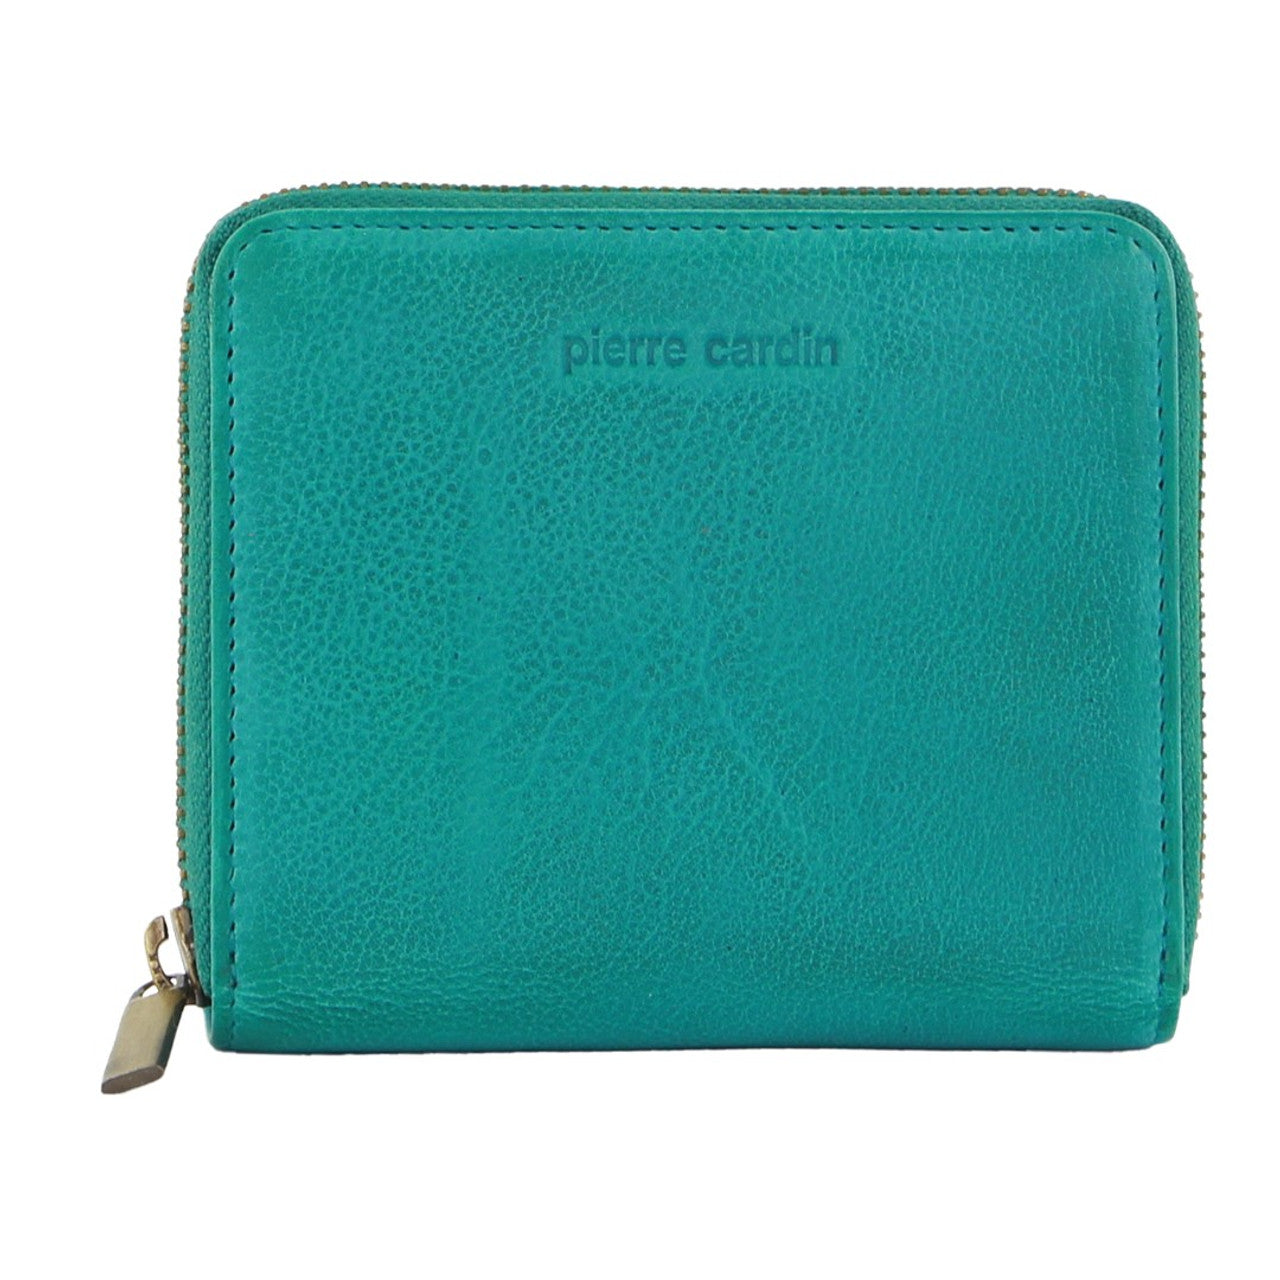 Pierre Cardin - PC3633 Small zip Wallet - Turquoise-1